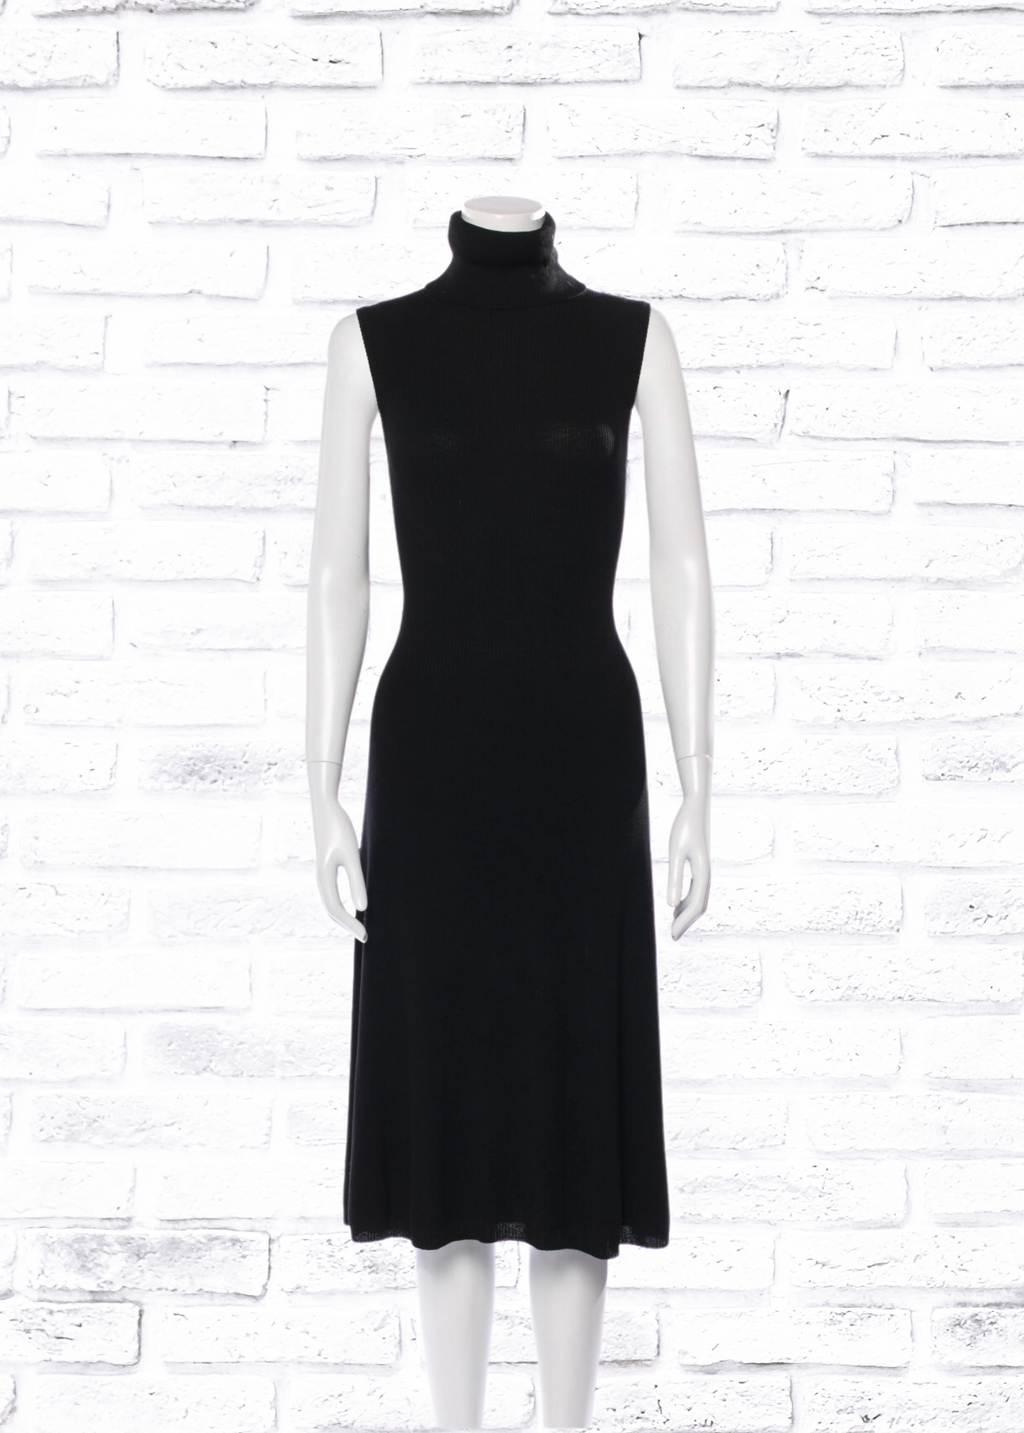 Hanley Mellon Black Sleeveless Turtleneck Dress